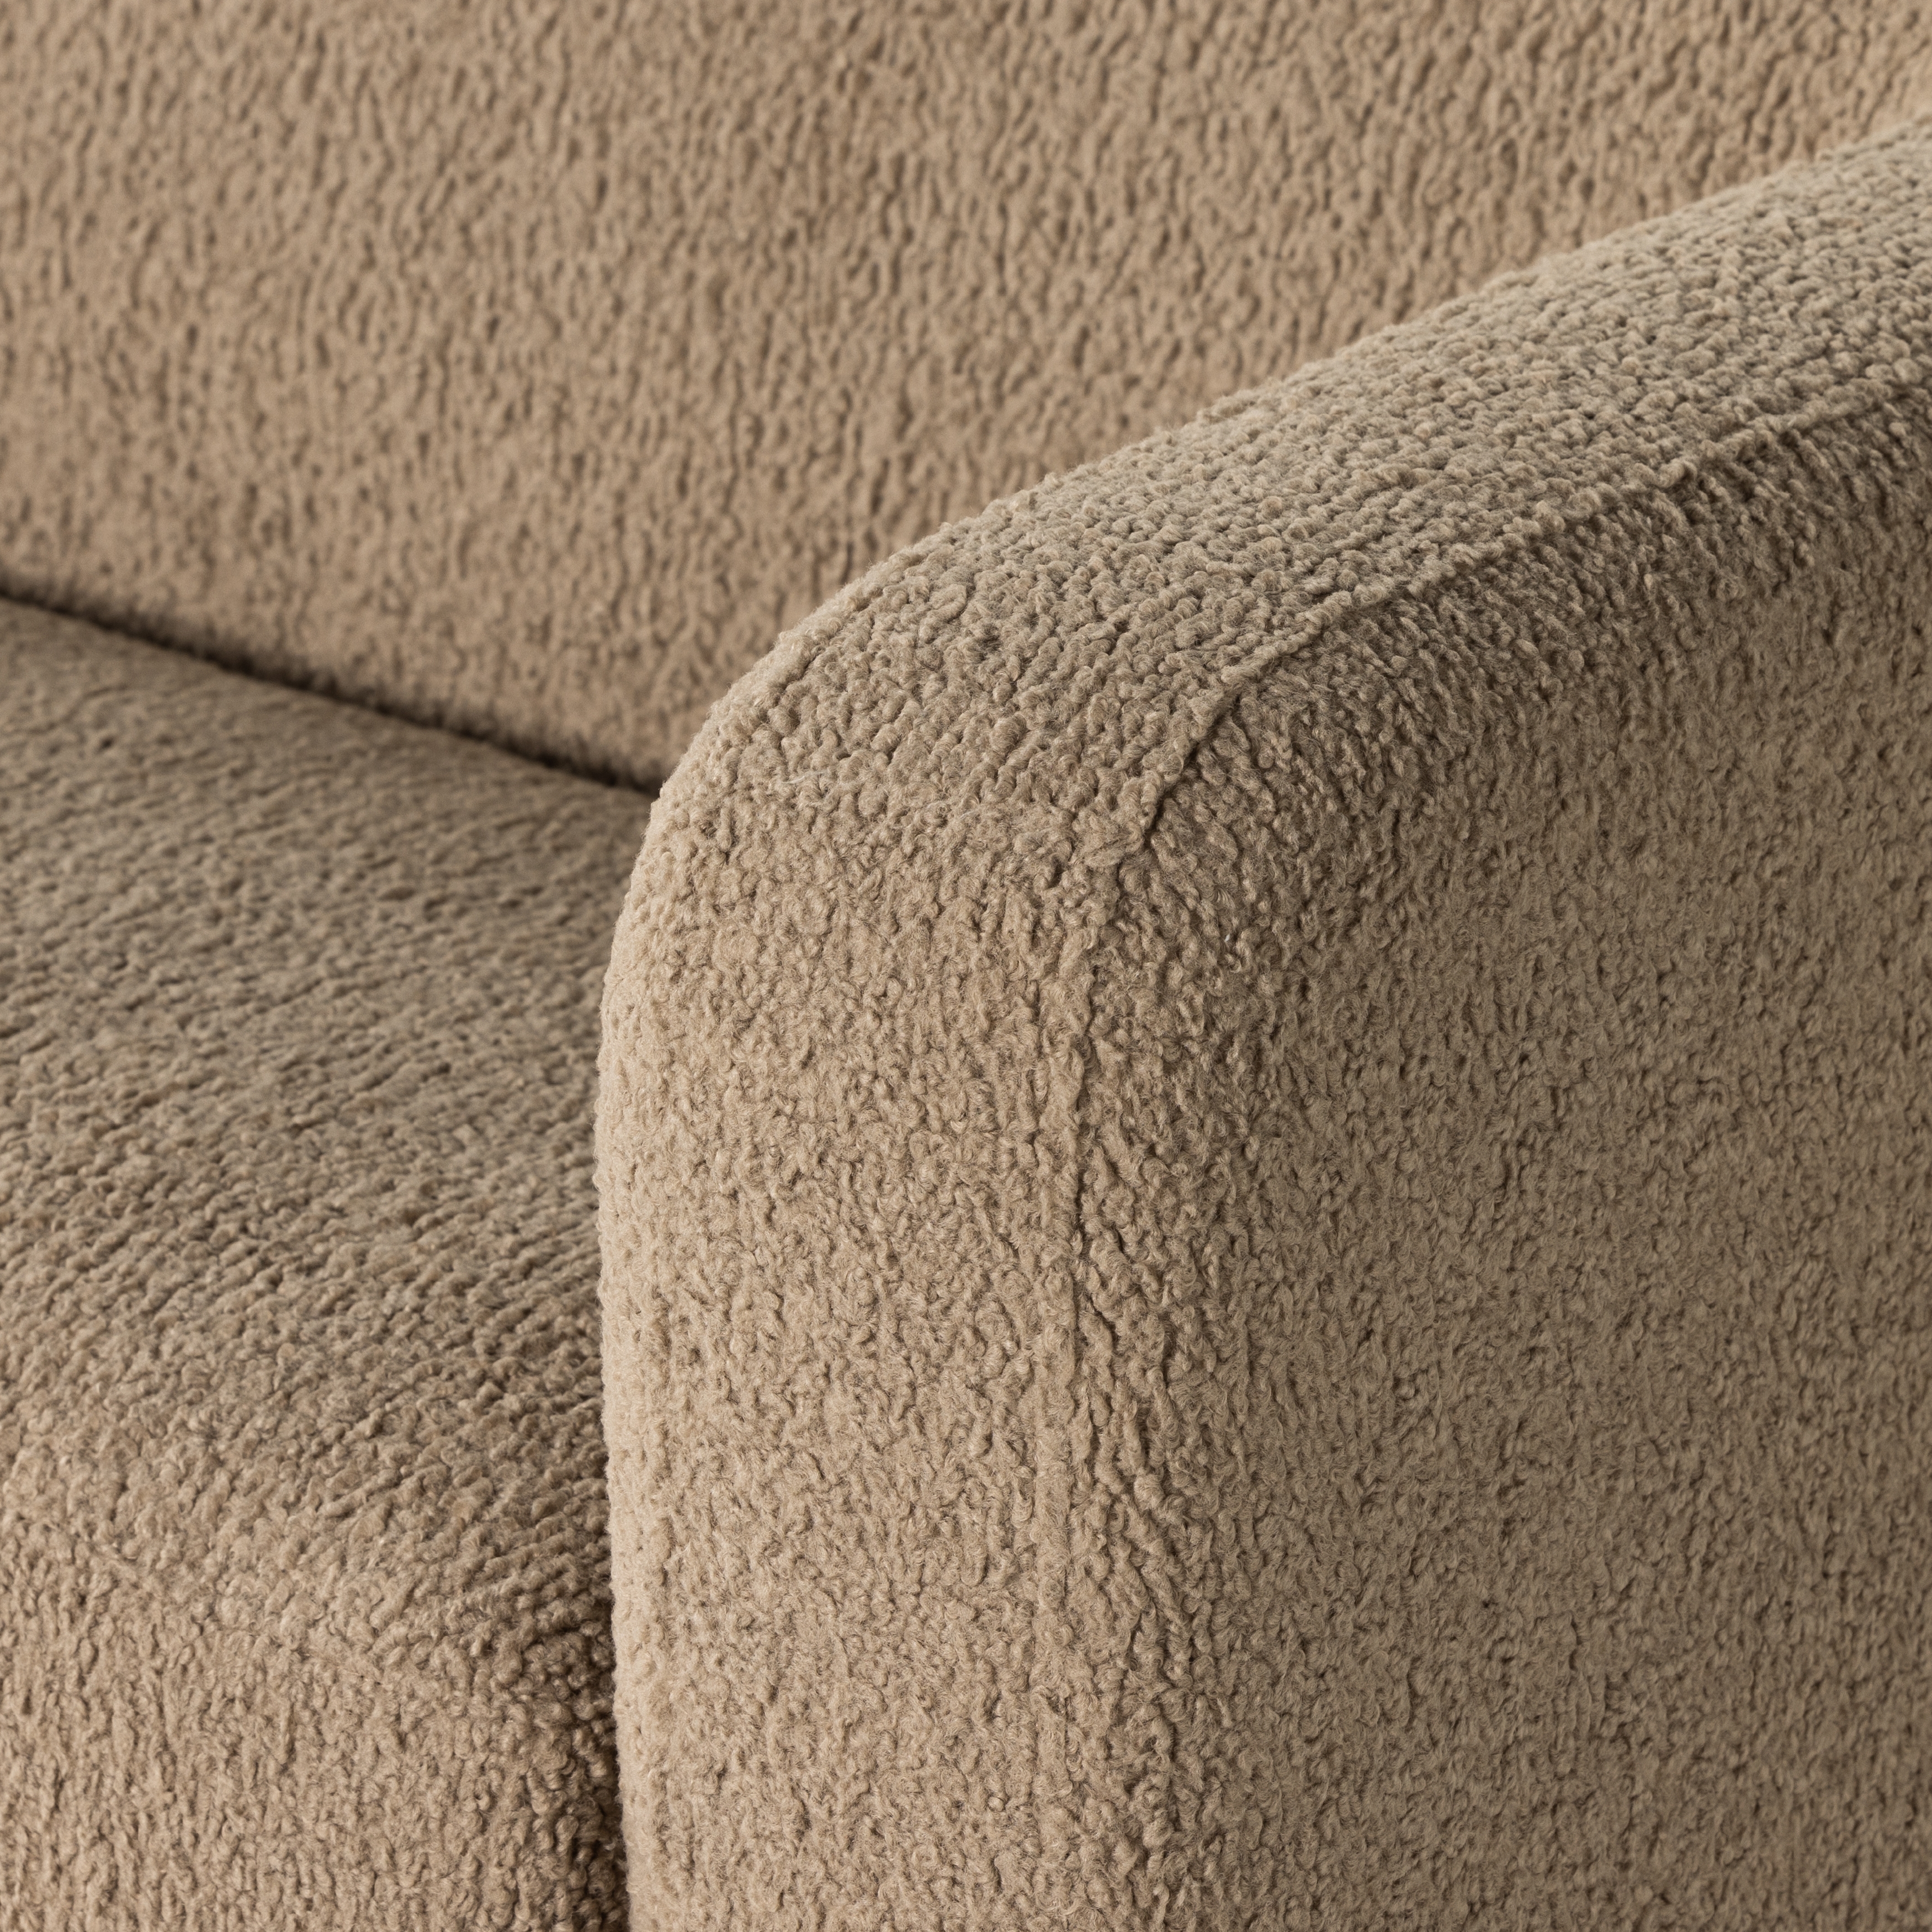 Gidget Sofa - Sheepskin Camel - Image 9